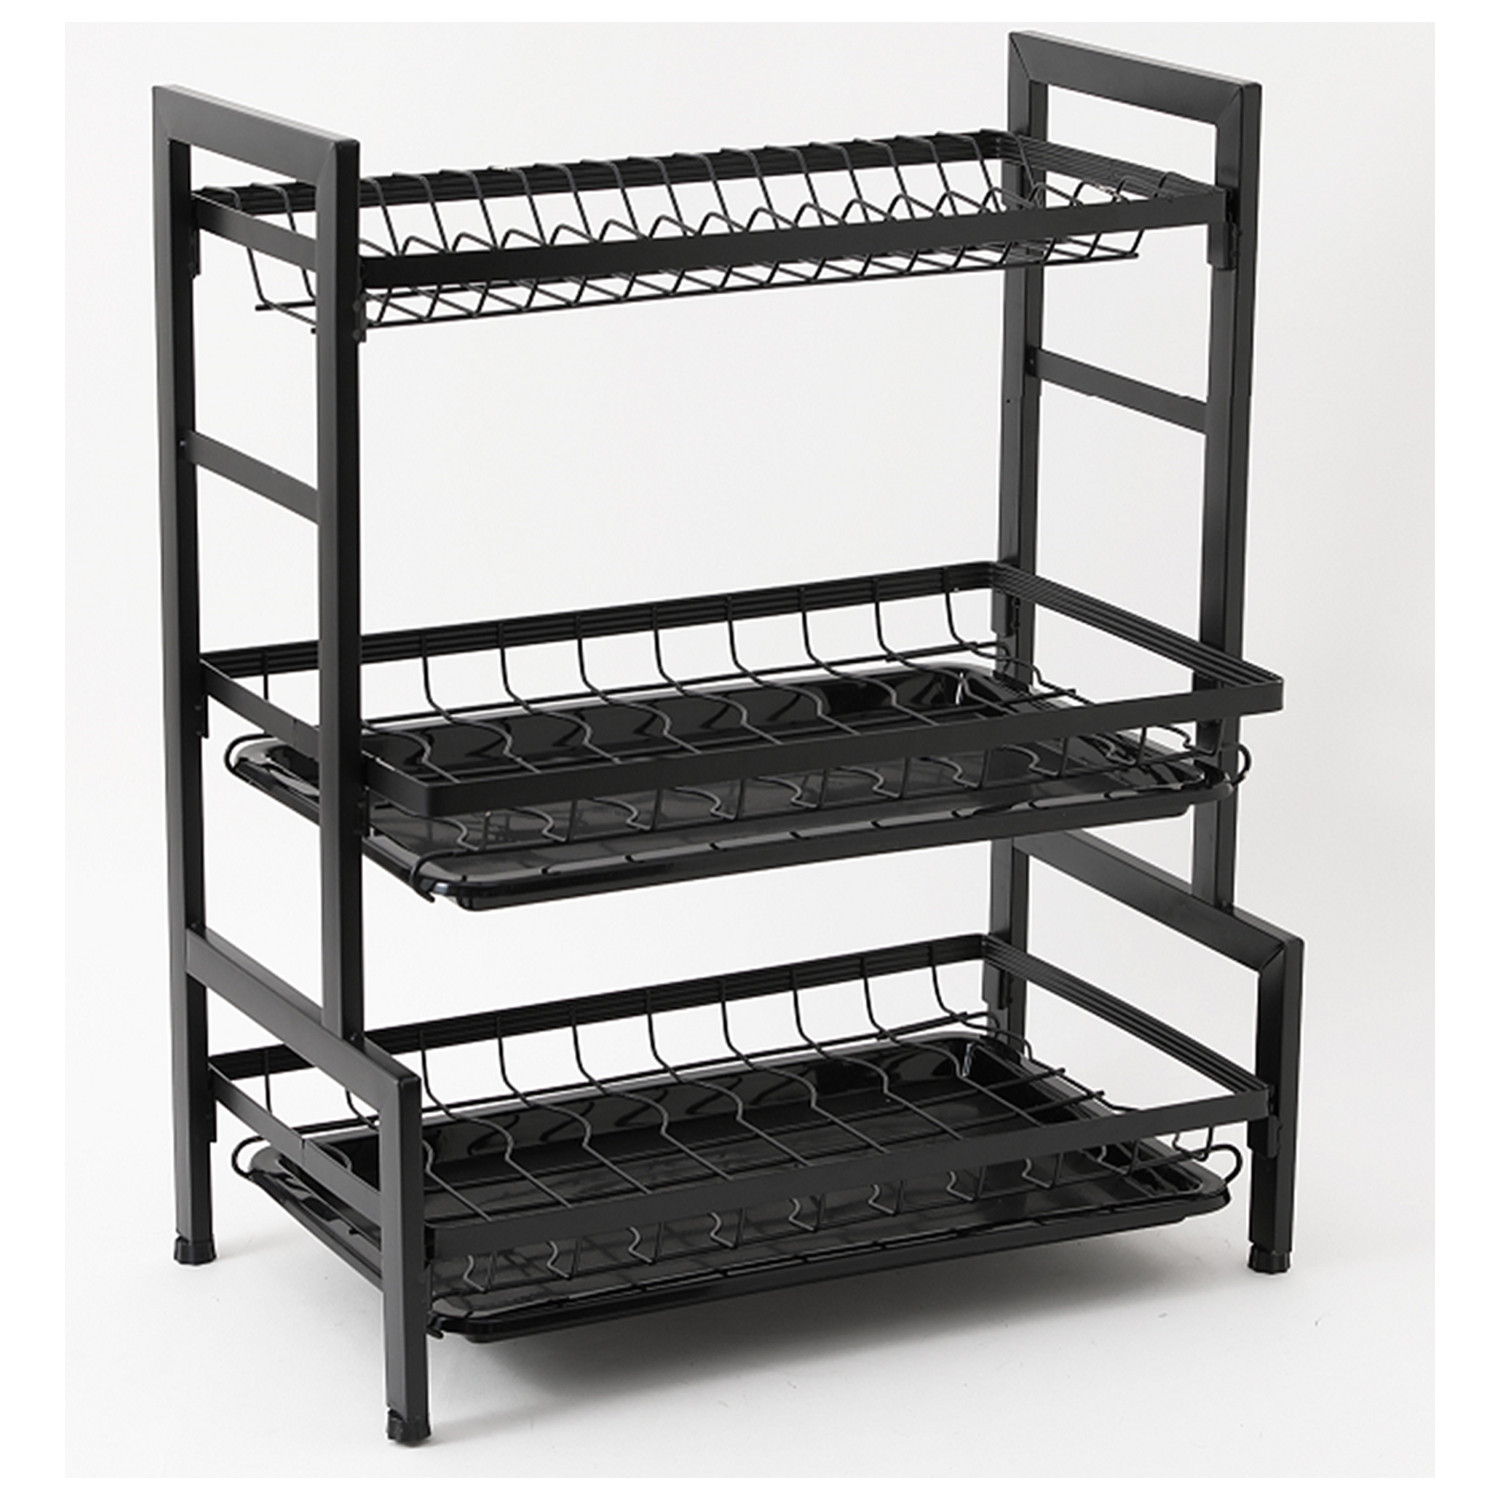 Kuber Industries 3-Layer Dish Drying Rack|Storage Rack for Kitchen Counter|Drainboard & Cutting Board Holder|Premium Utensils Basket|Free Mounting (Black)